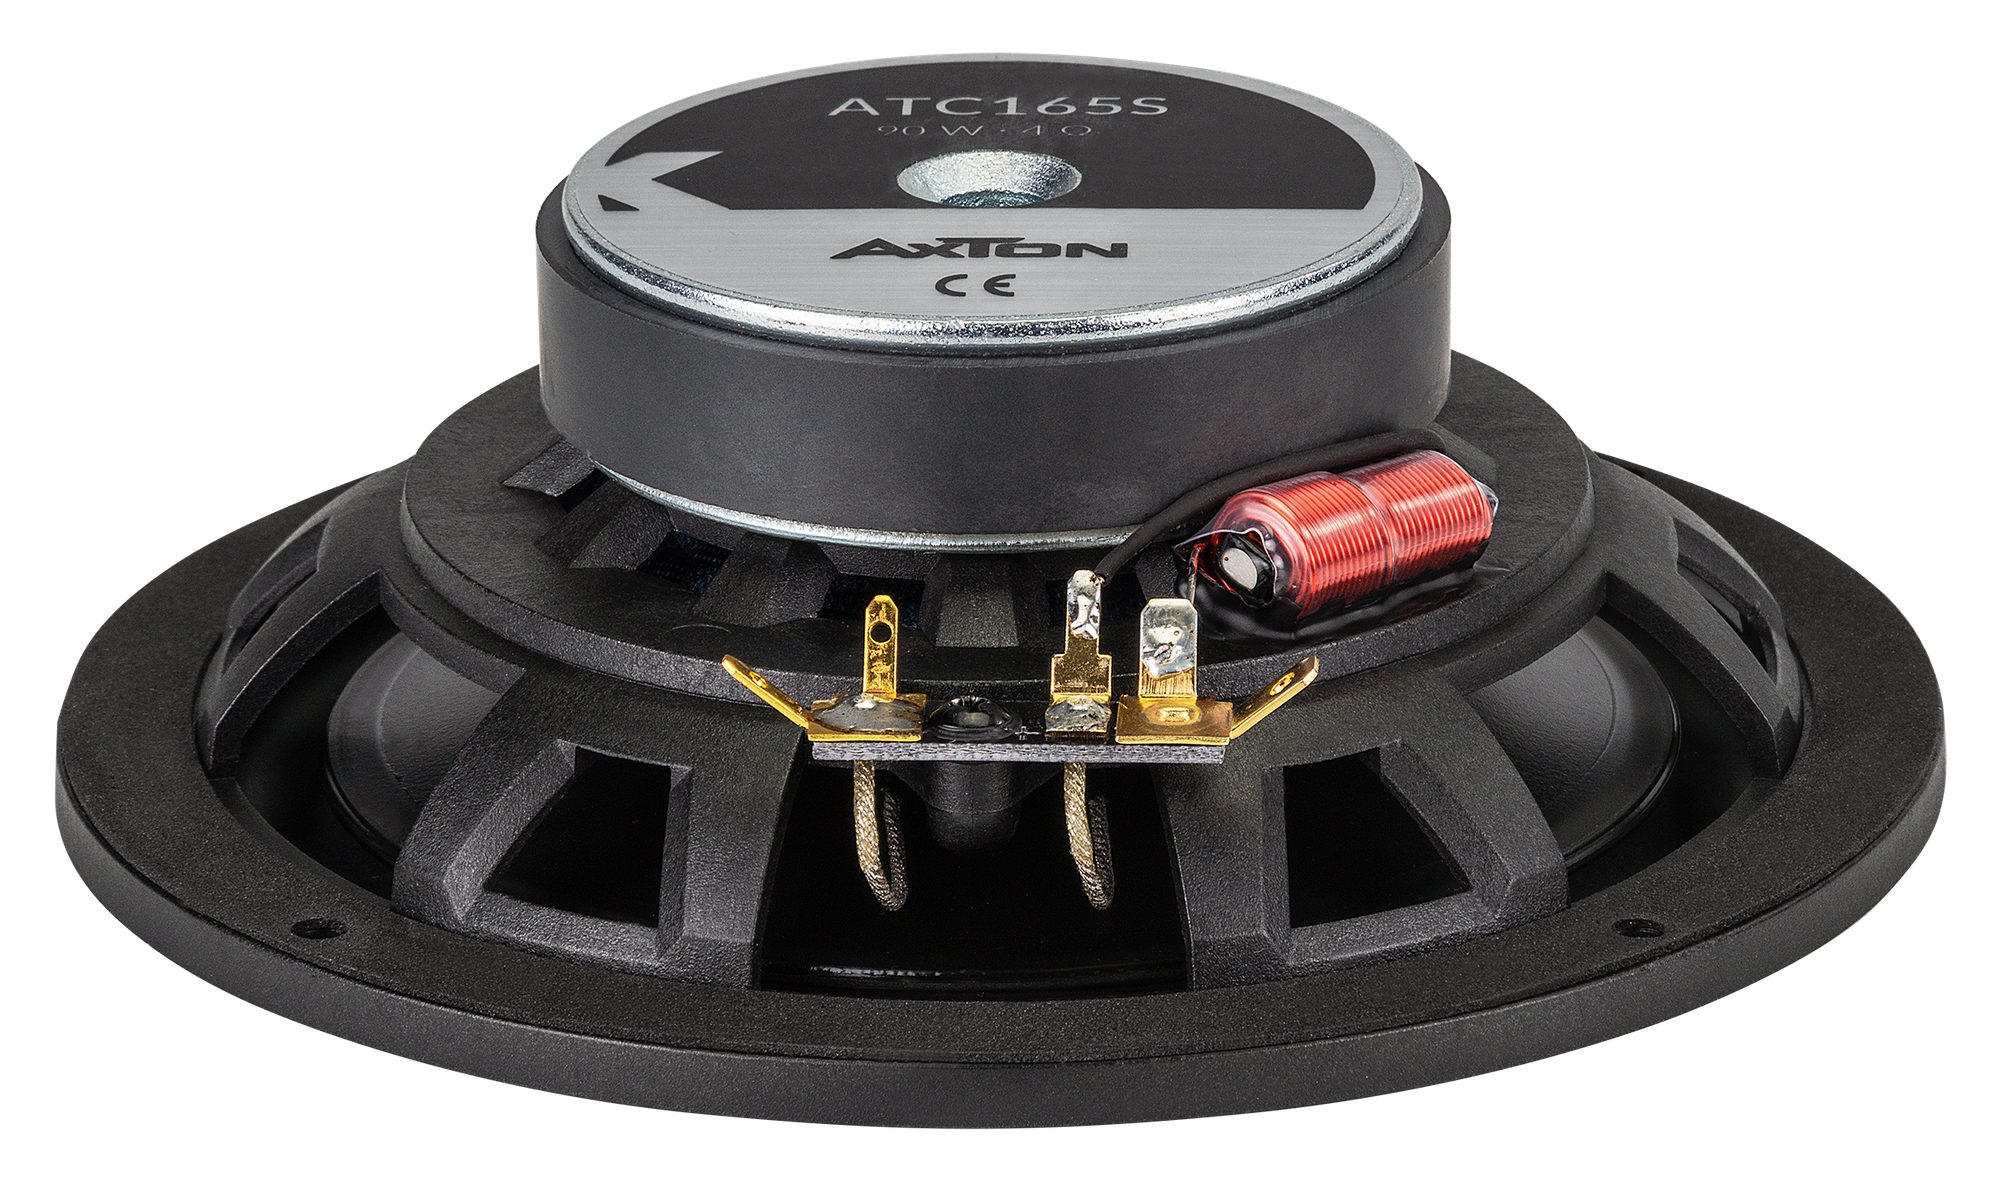 W, Kompo Axton (90 Kompo 2-Wege 16cm Auto-Lautsprecher Axton Lautsprecher 2-Wege ATC165S 16cm ATC165S System Lautsprecher System)